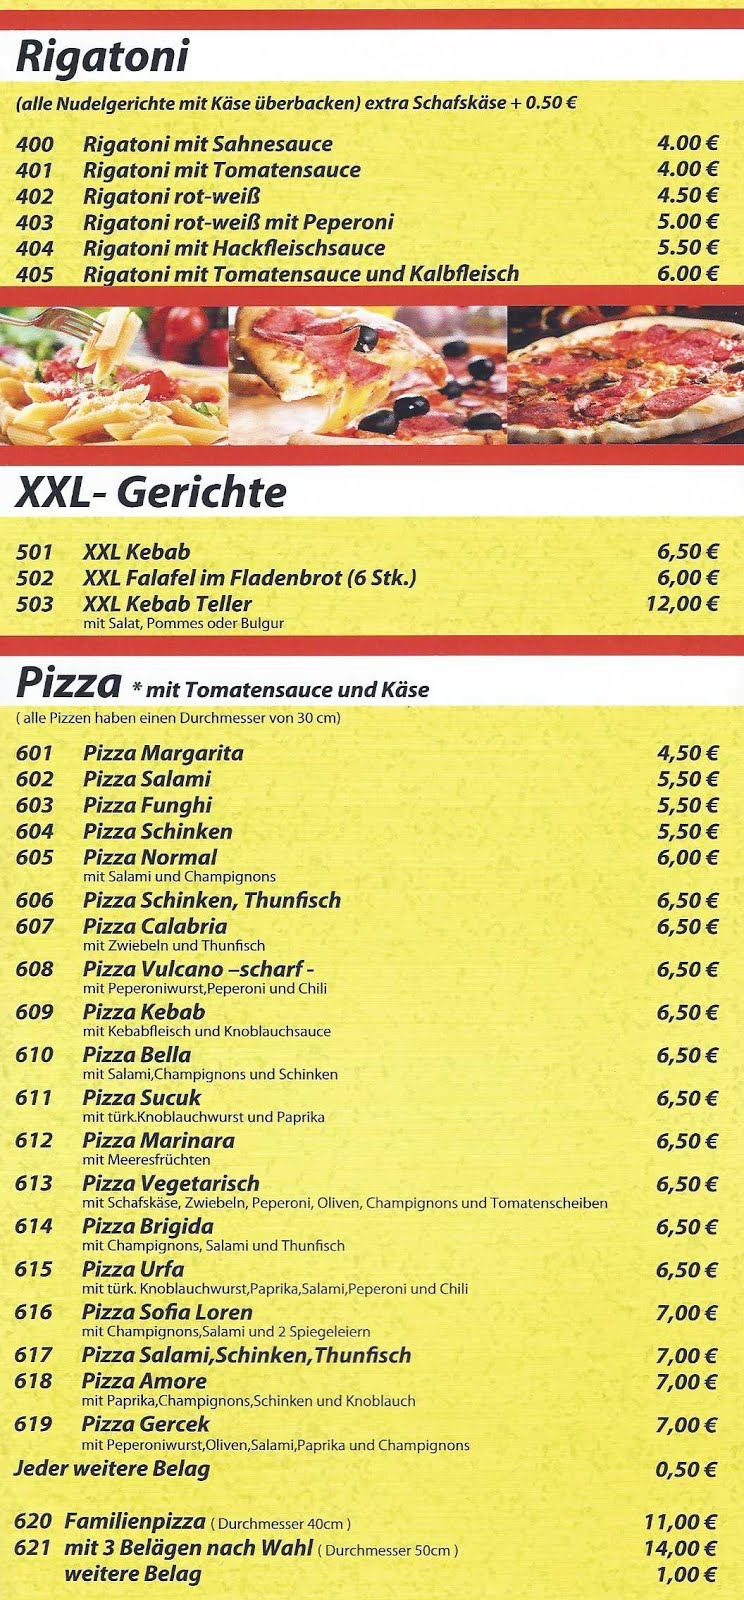 Rigatoni - XXL-Gerichte - Pizza